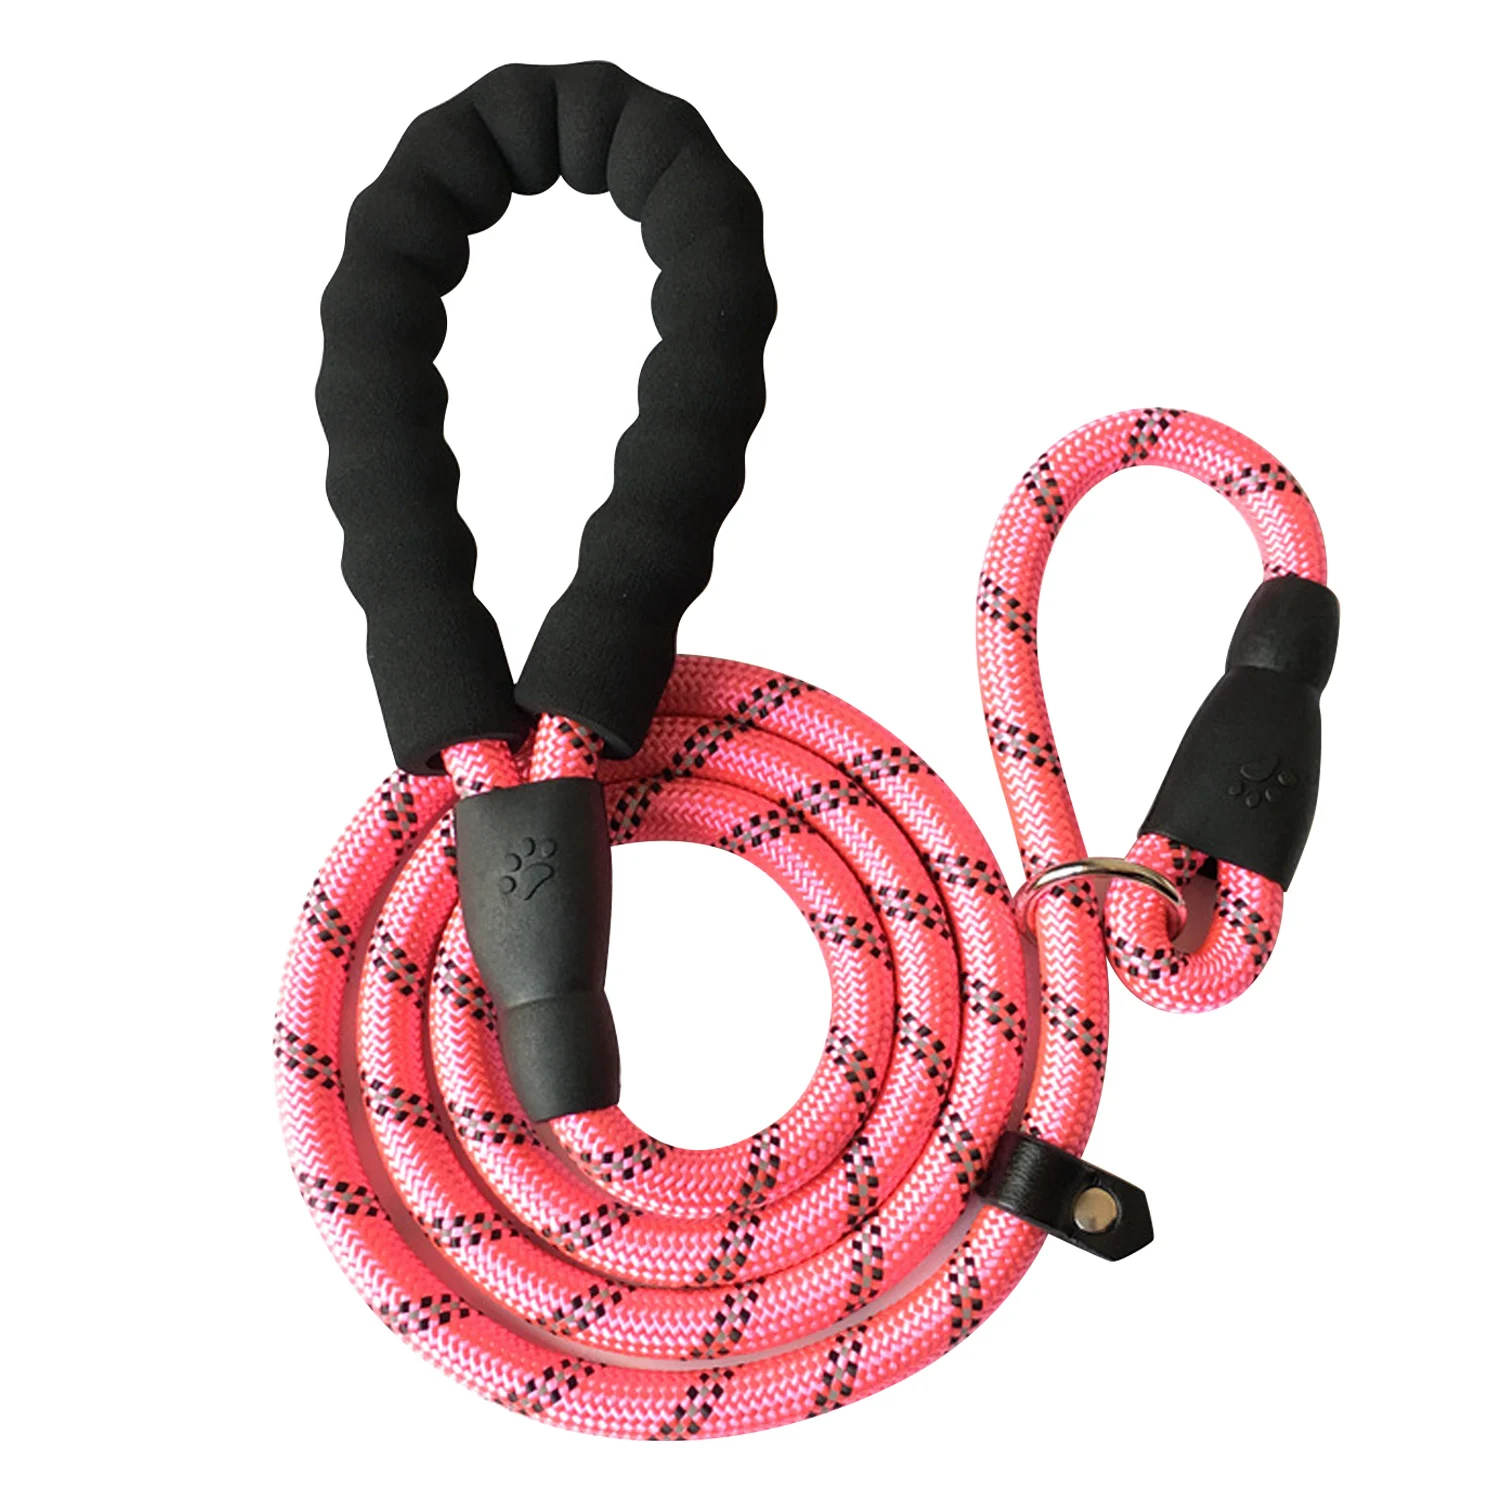 Behogar 6ft Heavy Duty Dog Leash Nylon Adjustable Reflective P Shape Pet Training Lead Leashes String Line for Medium Large Dogs - Цвет: Pink